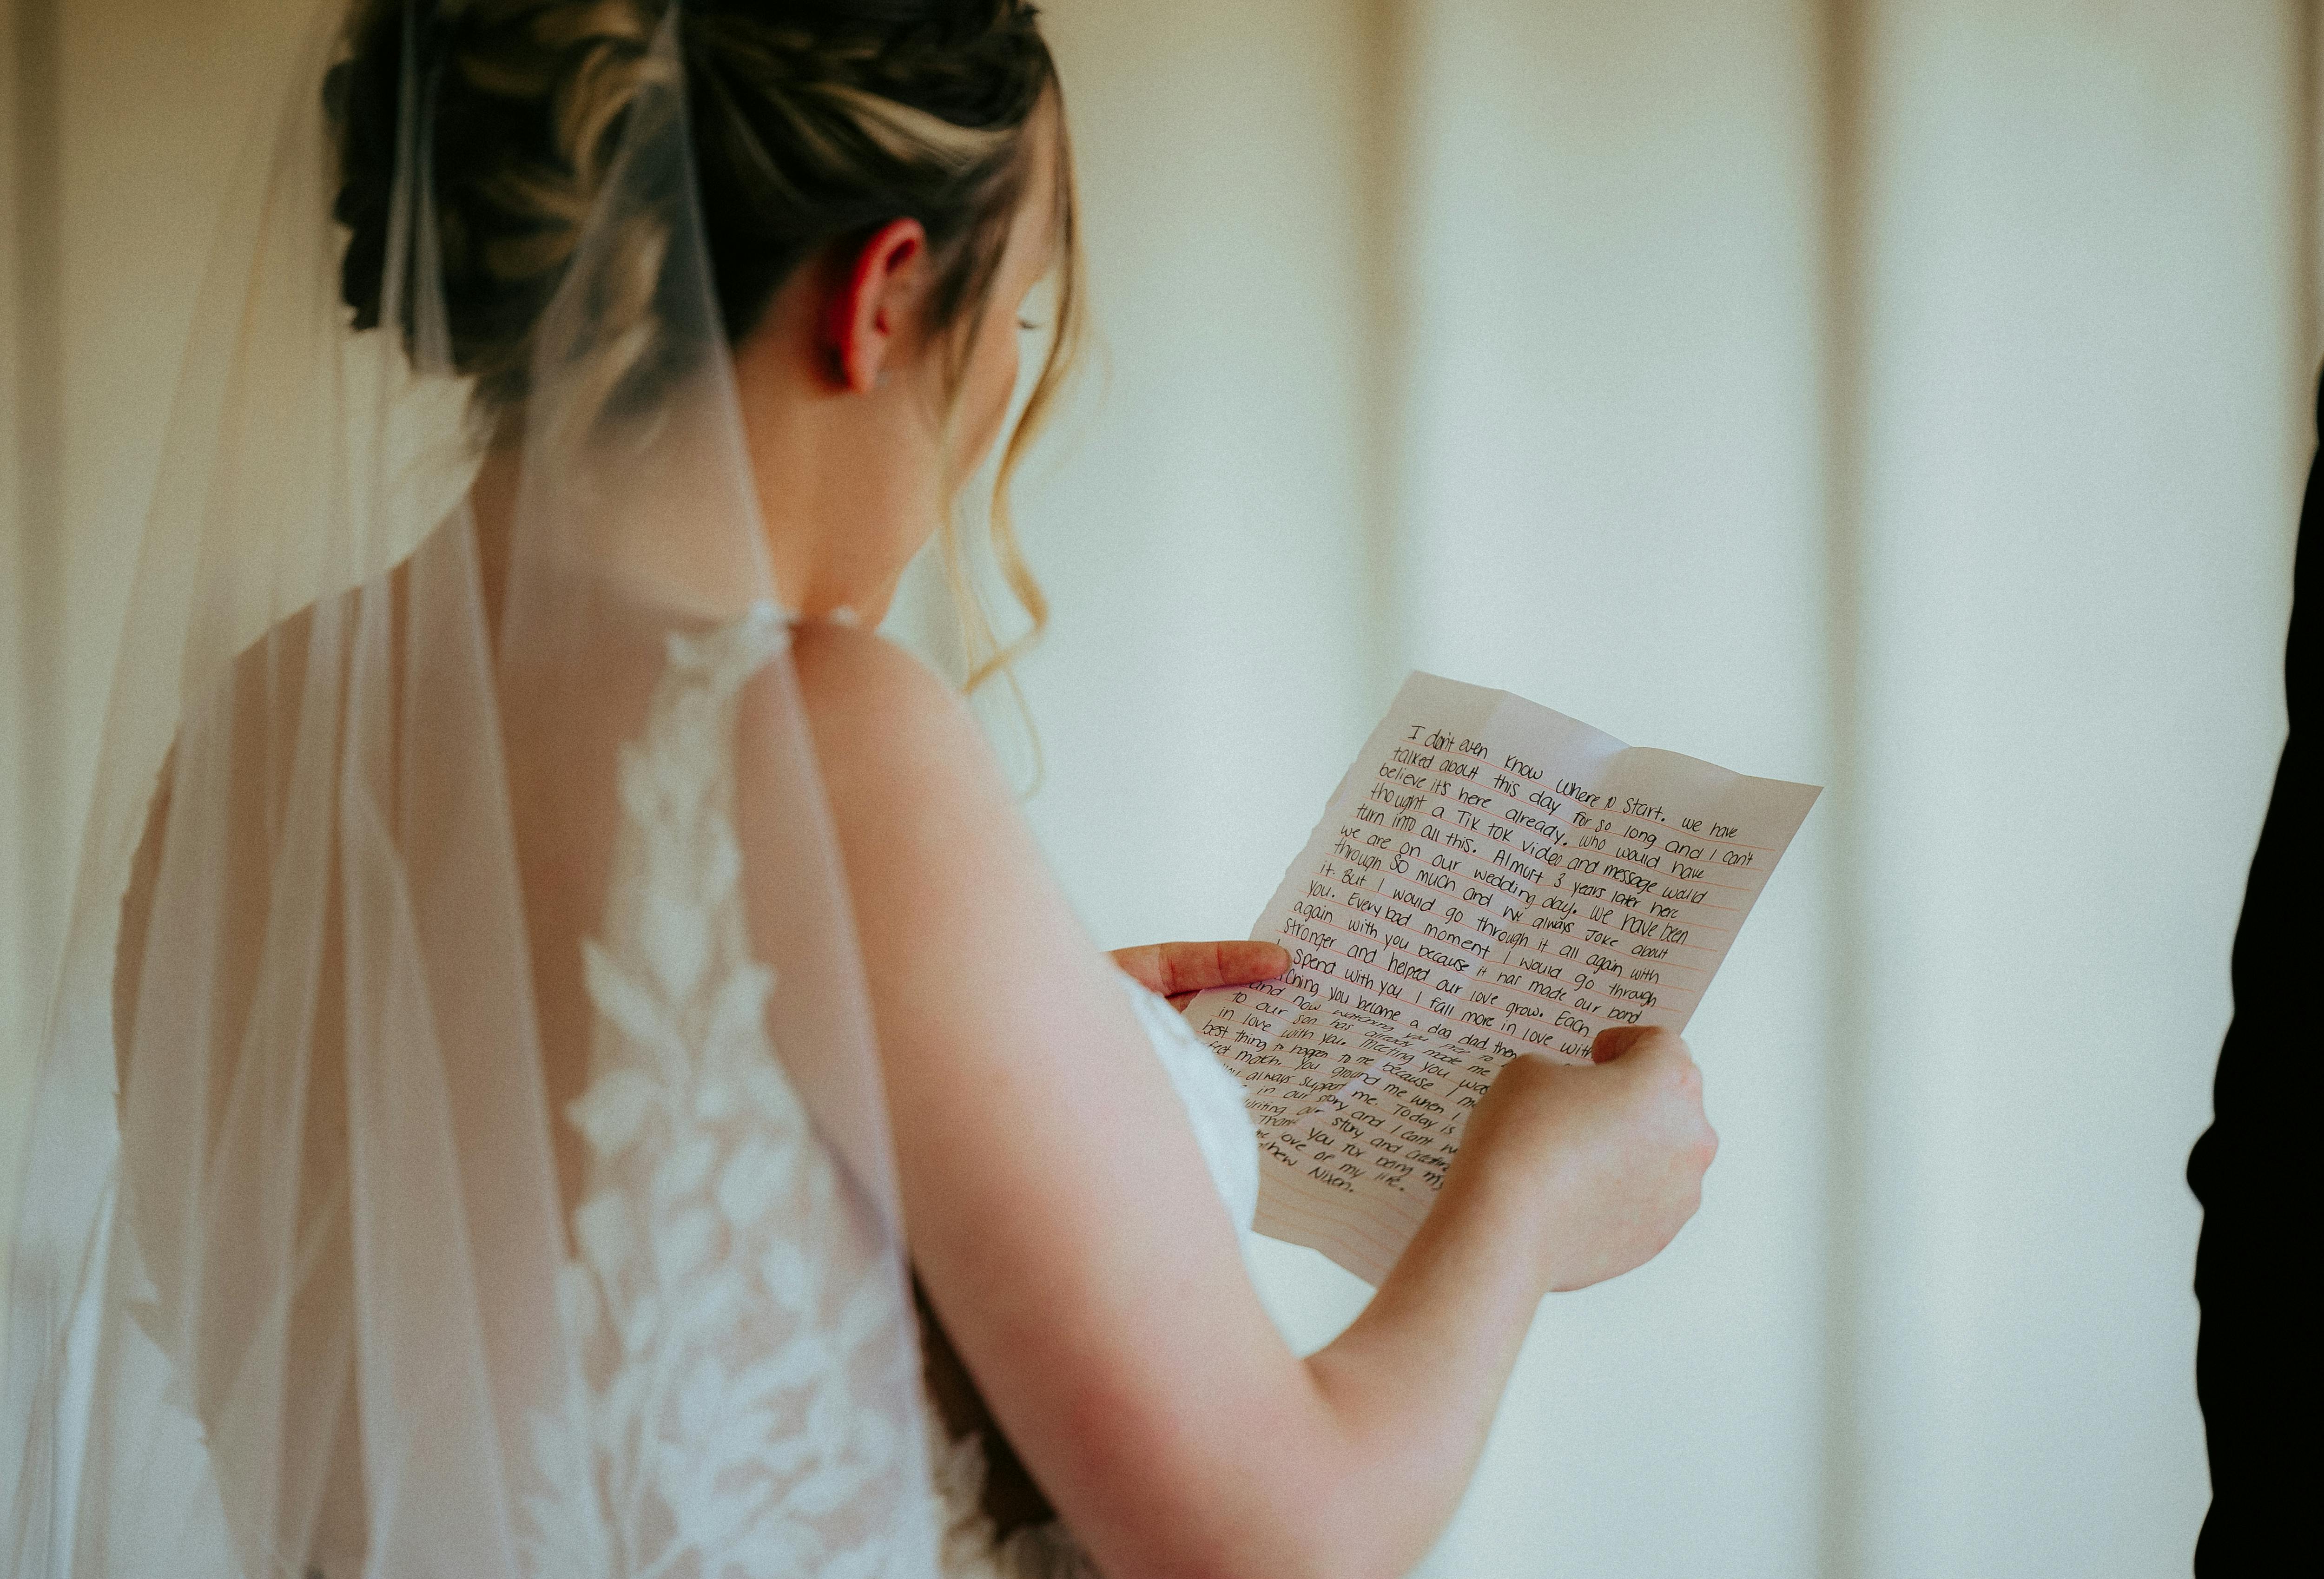 A bride reading a letter | Source: Pexels